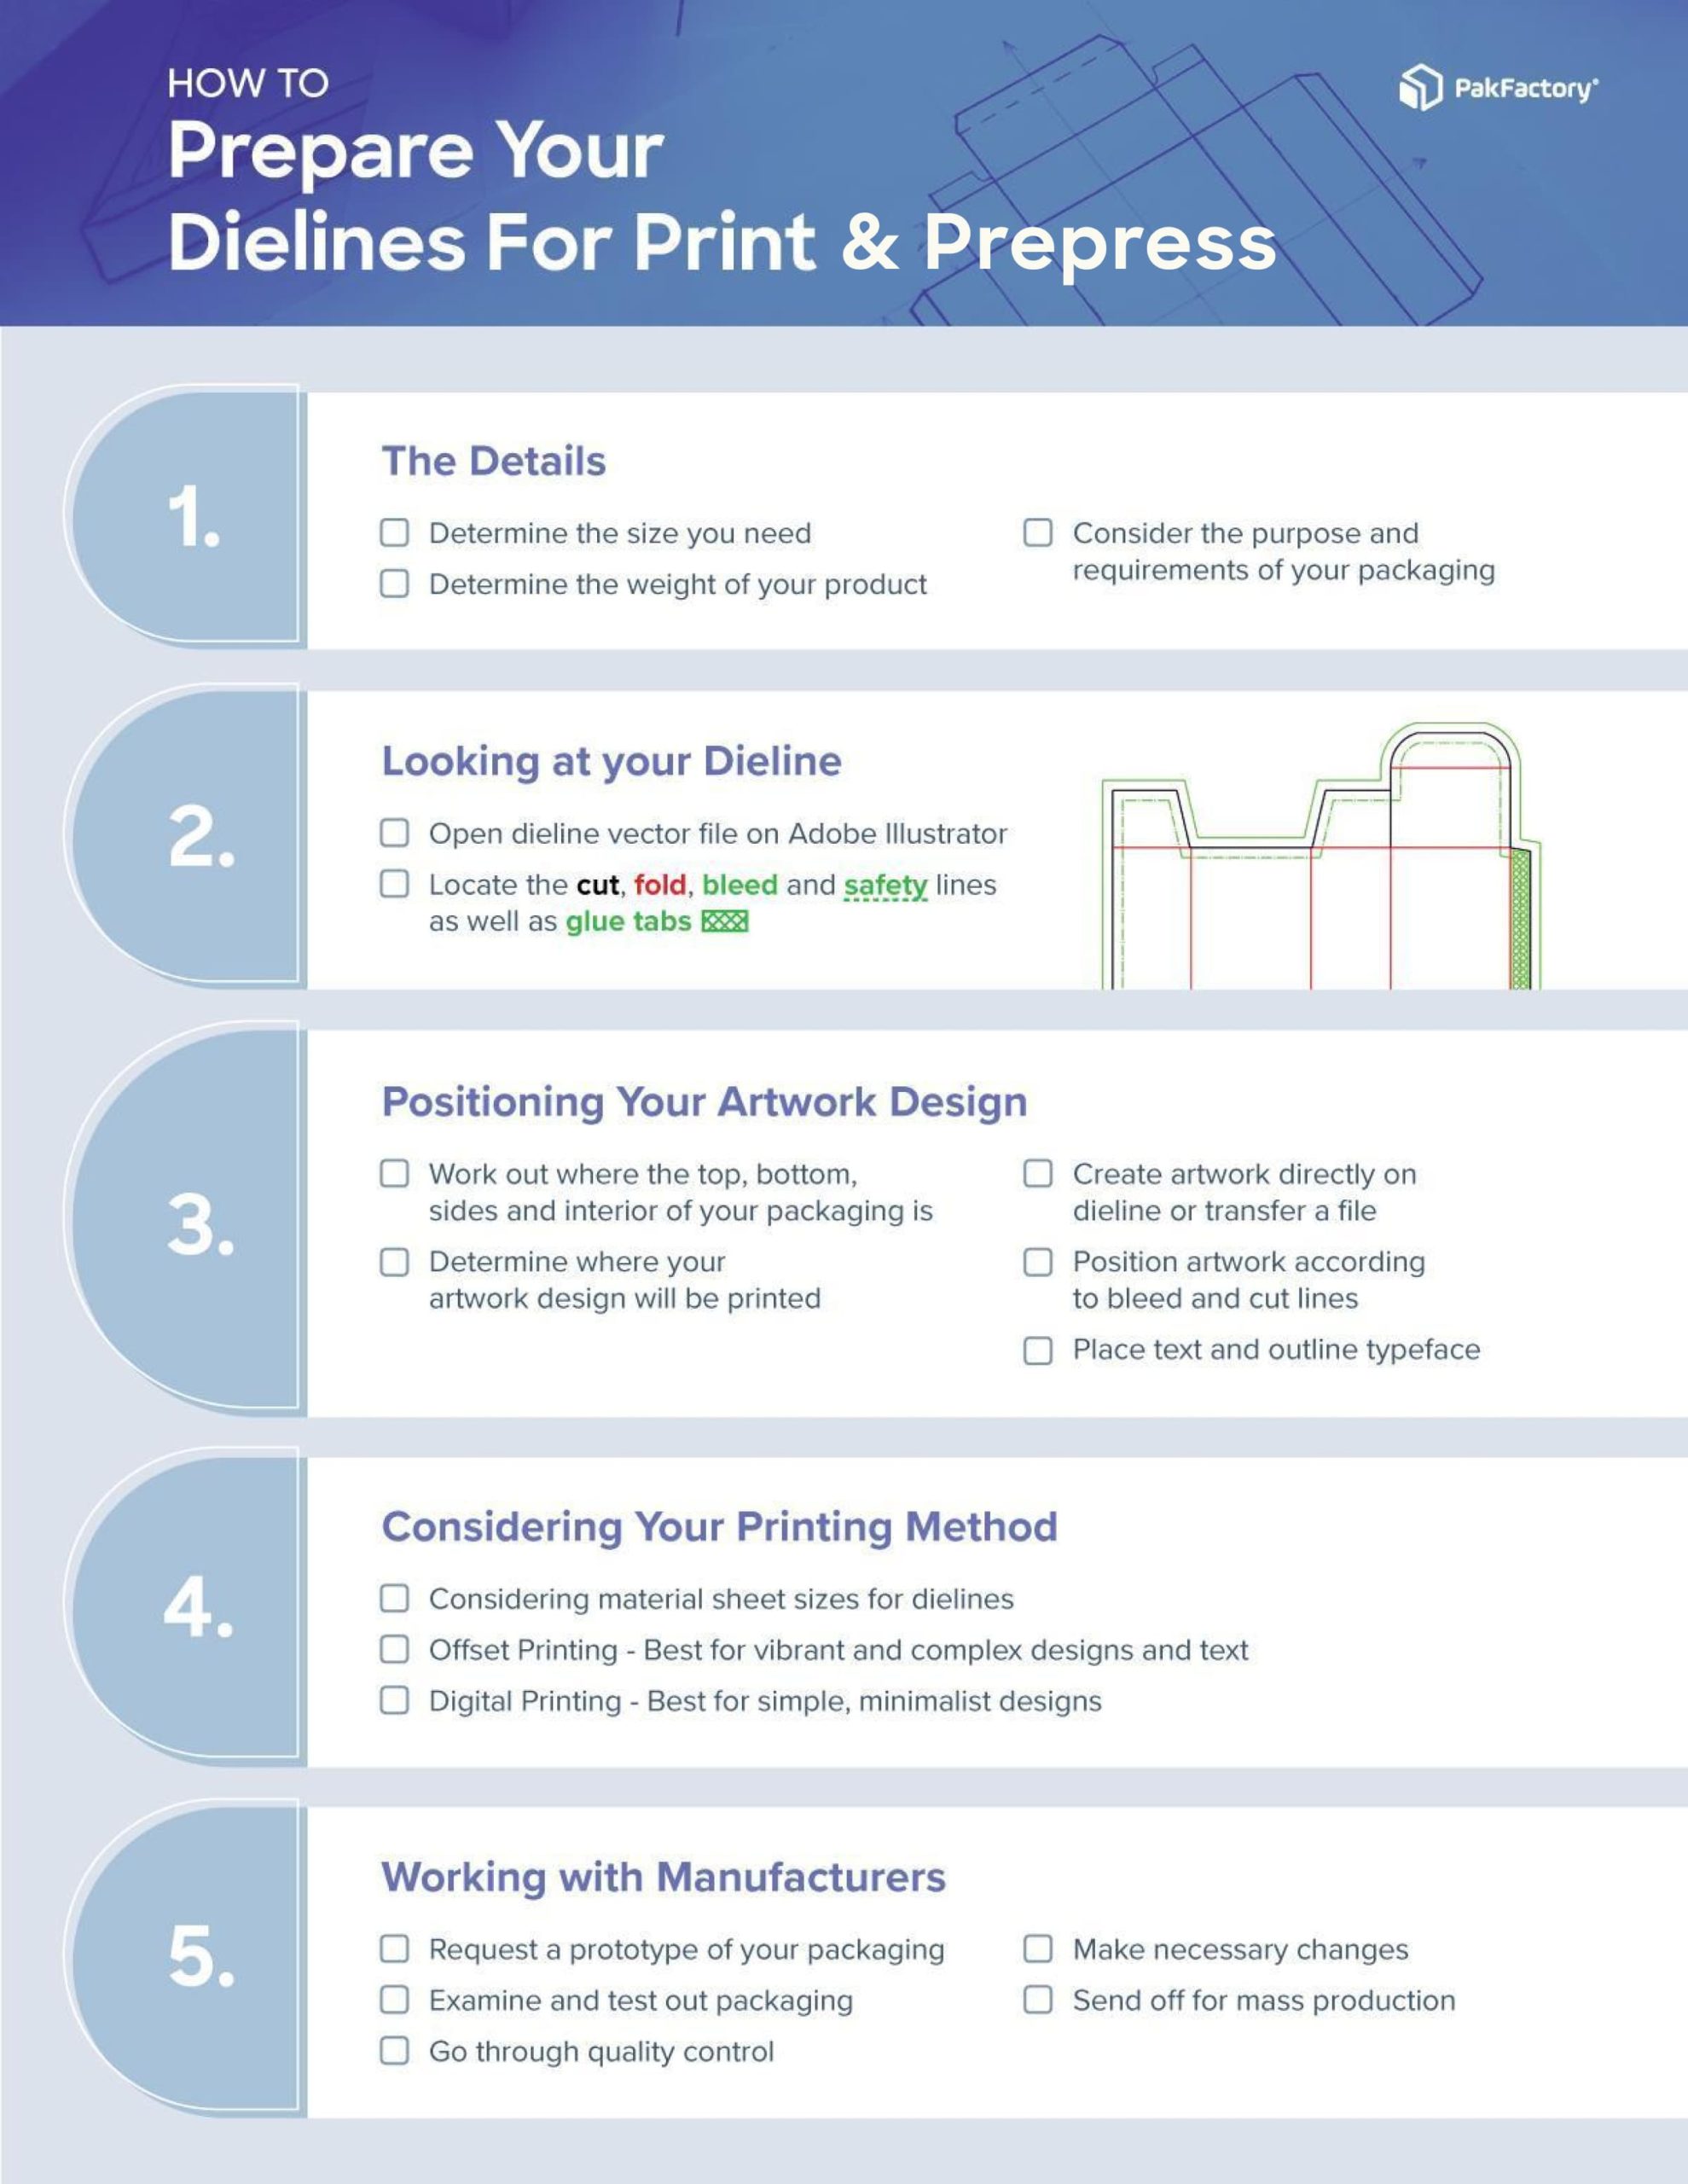 Pakfactory dieline file checklist for prepress and print